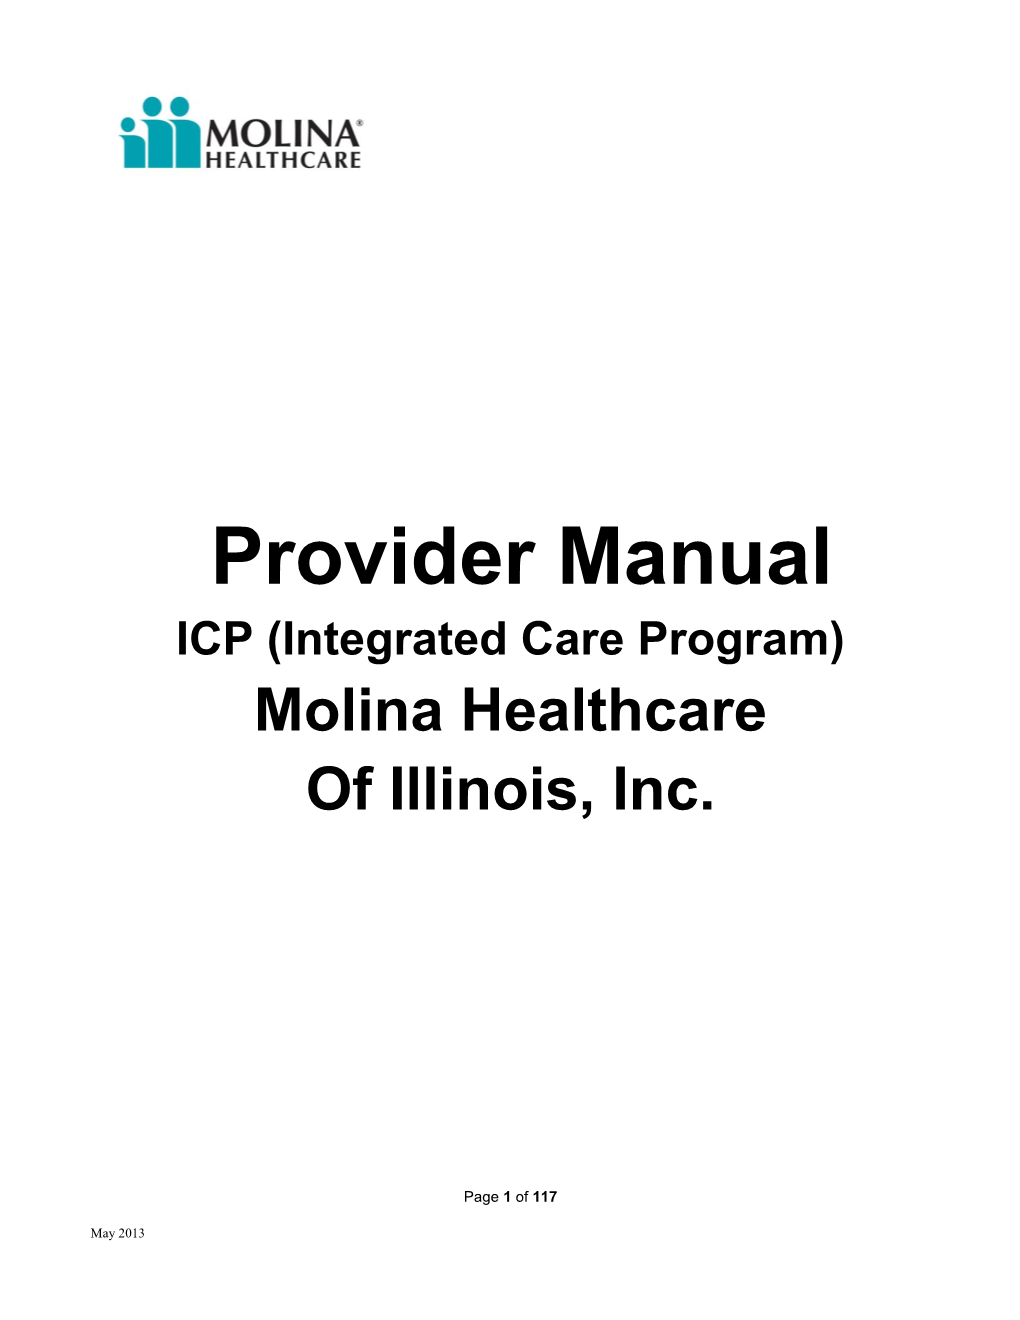 Provider Manual ICP (Integrated Care Program) Molina Healthcare of Illinois, Inc